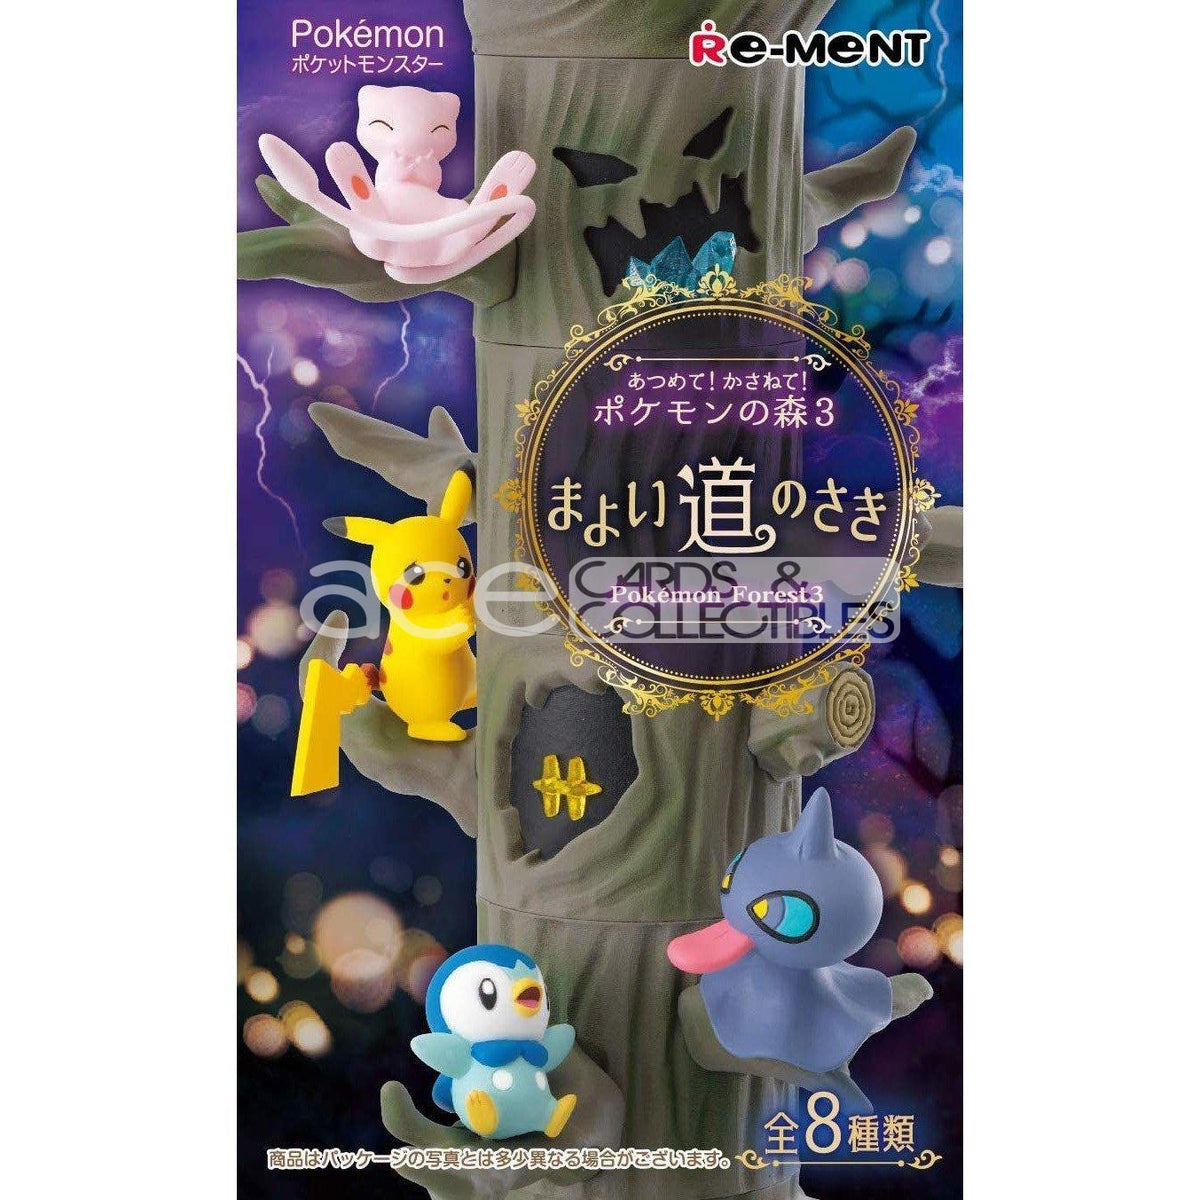 Re-Ment Pokémon Forest 3 -Beyond The Lost Path-Single Box (Random)-Re-Ment-Ace Cards &amp; Collectibles